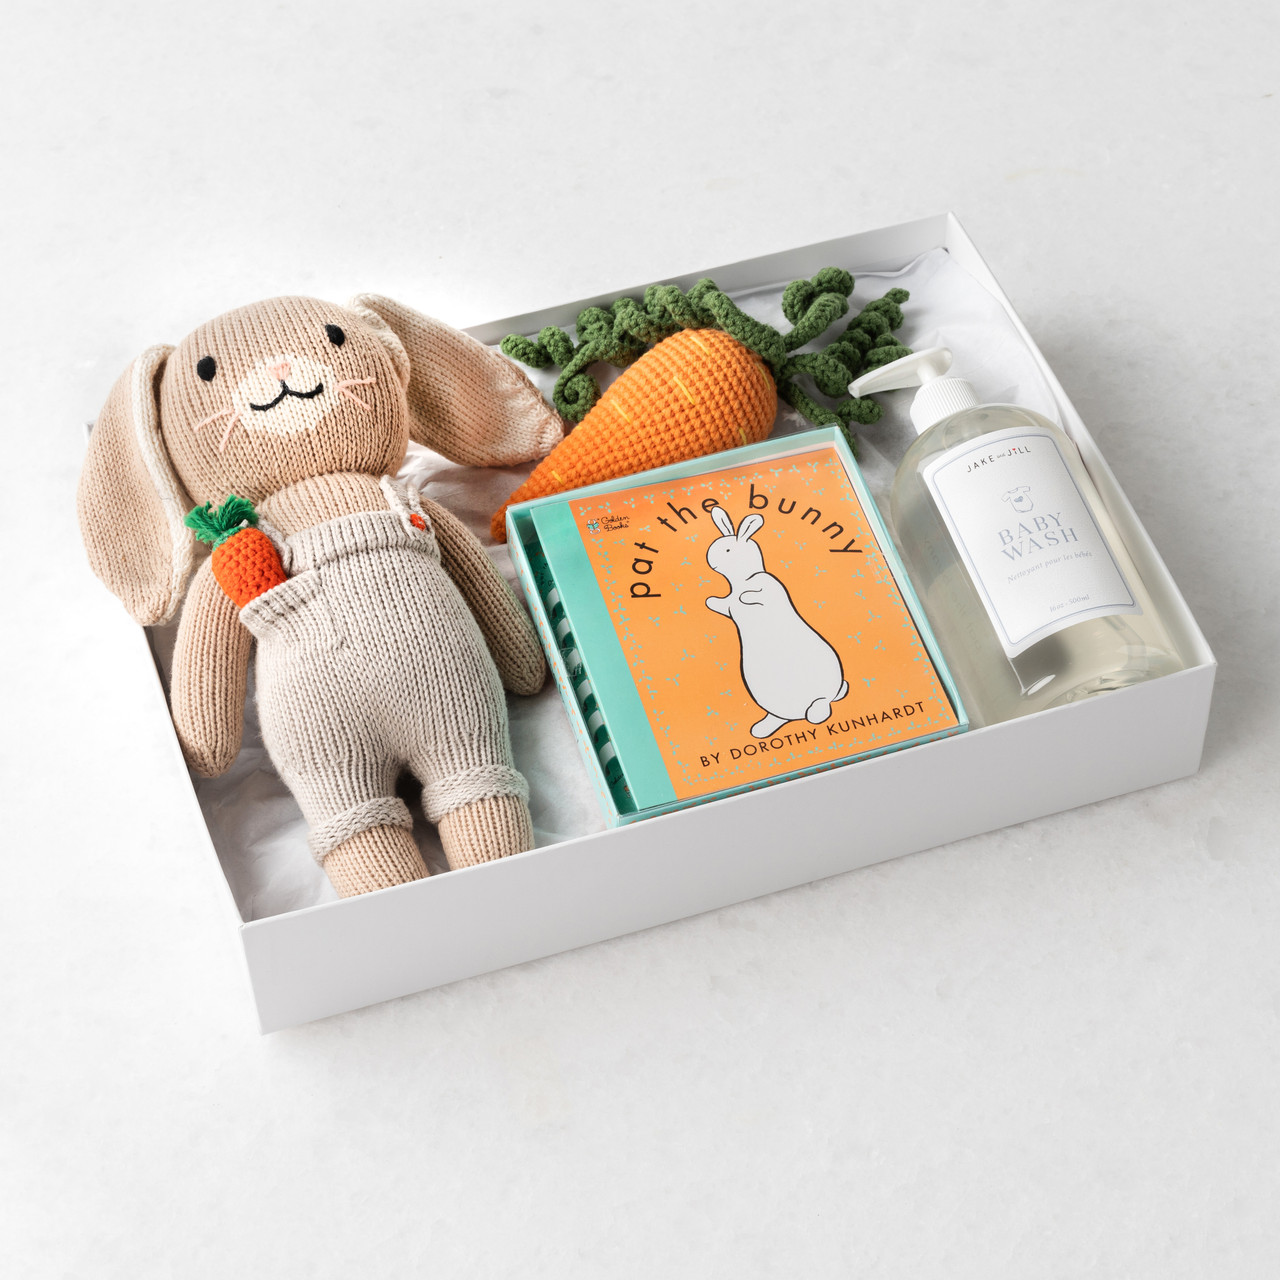 Pat the Bunny gift box